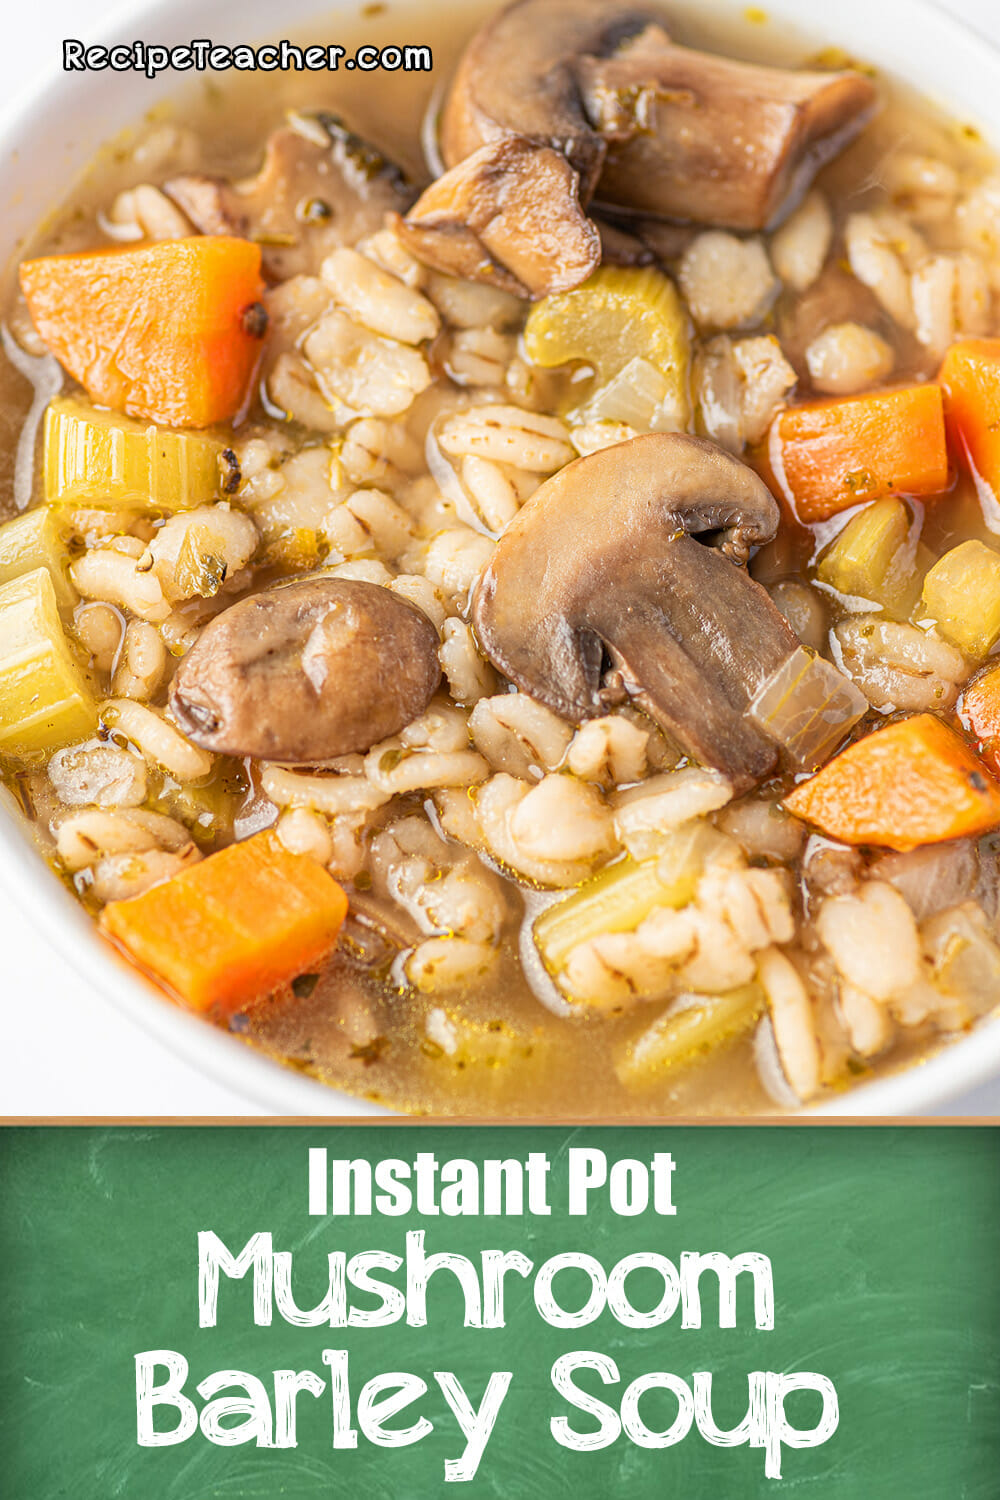 Instant Pot mushroom barley soup recipe